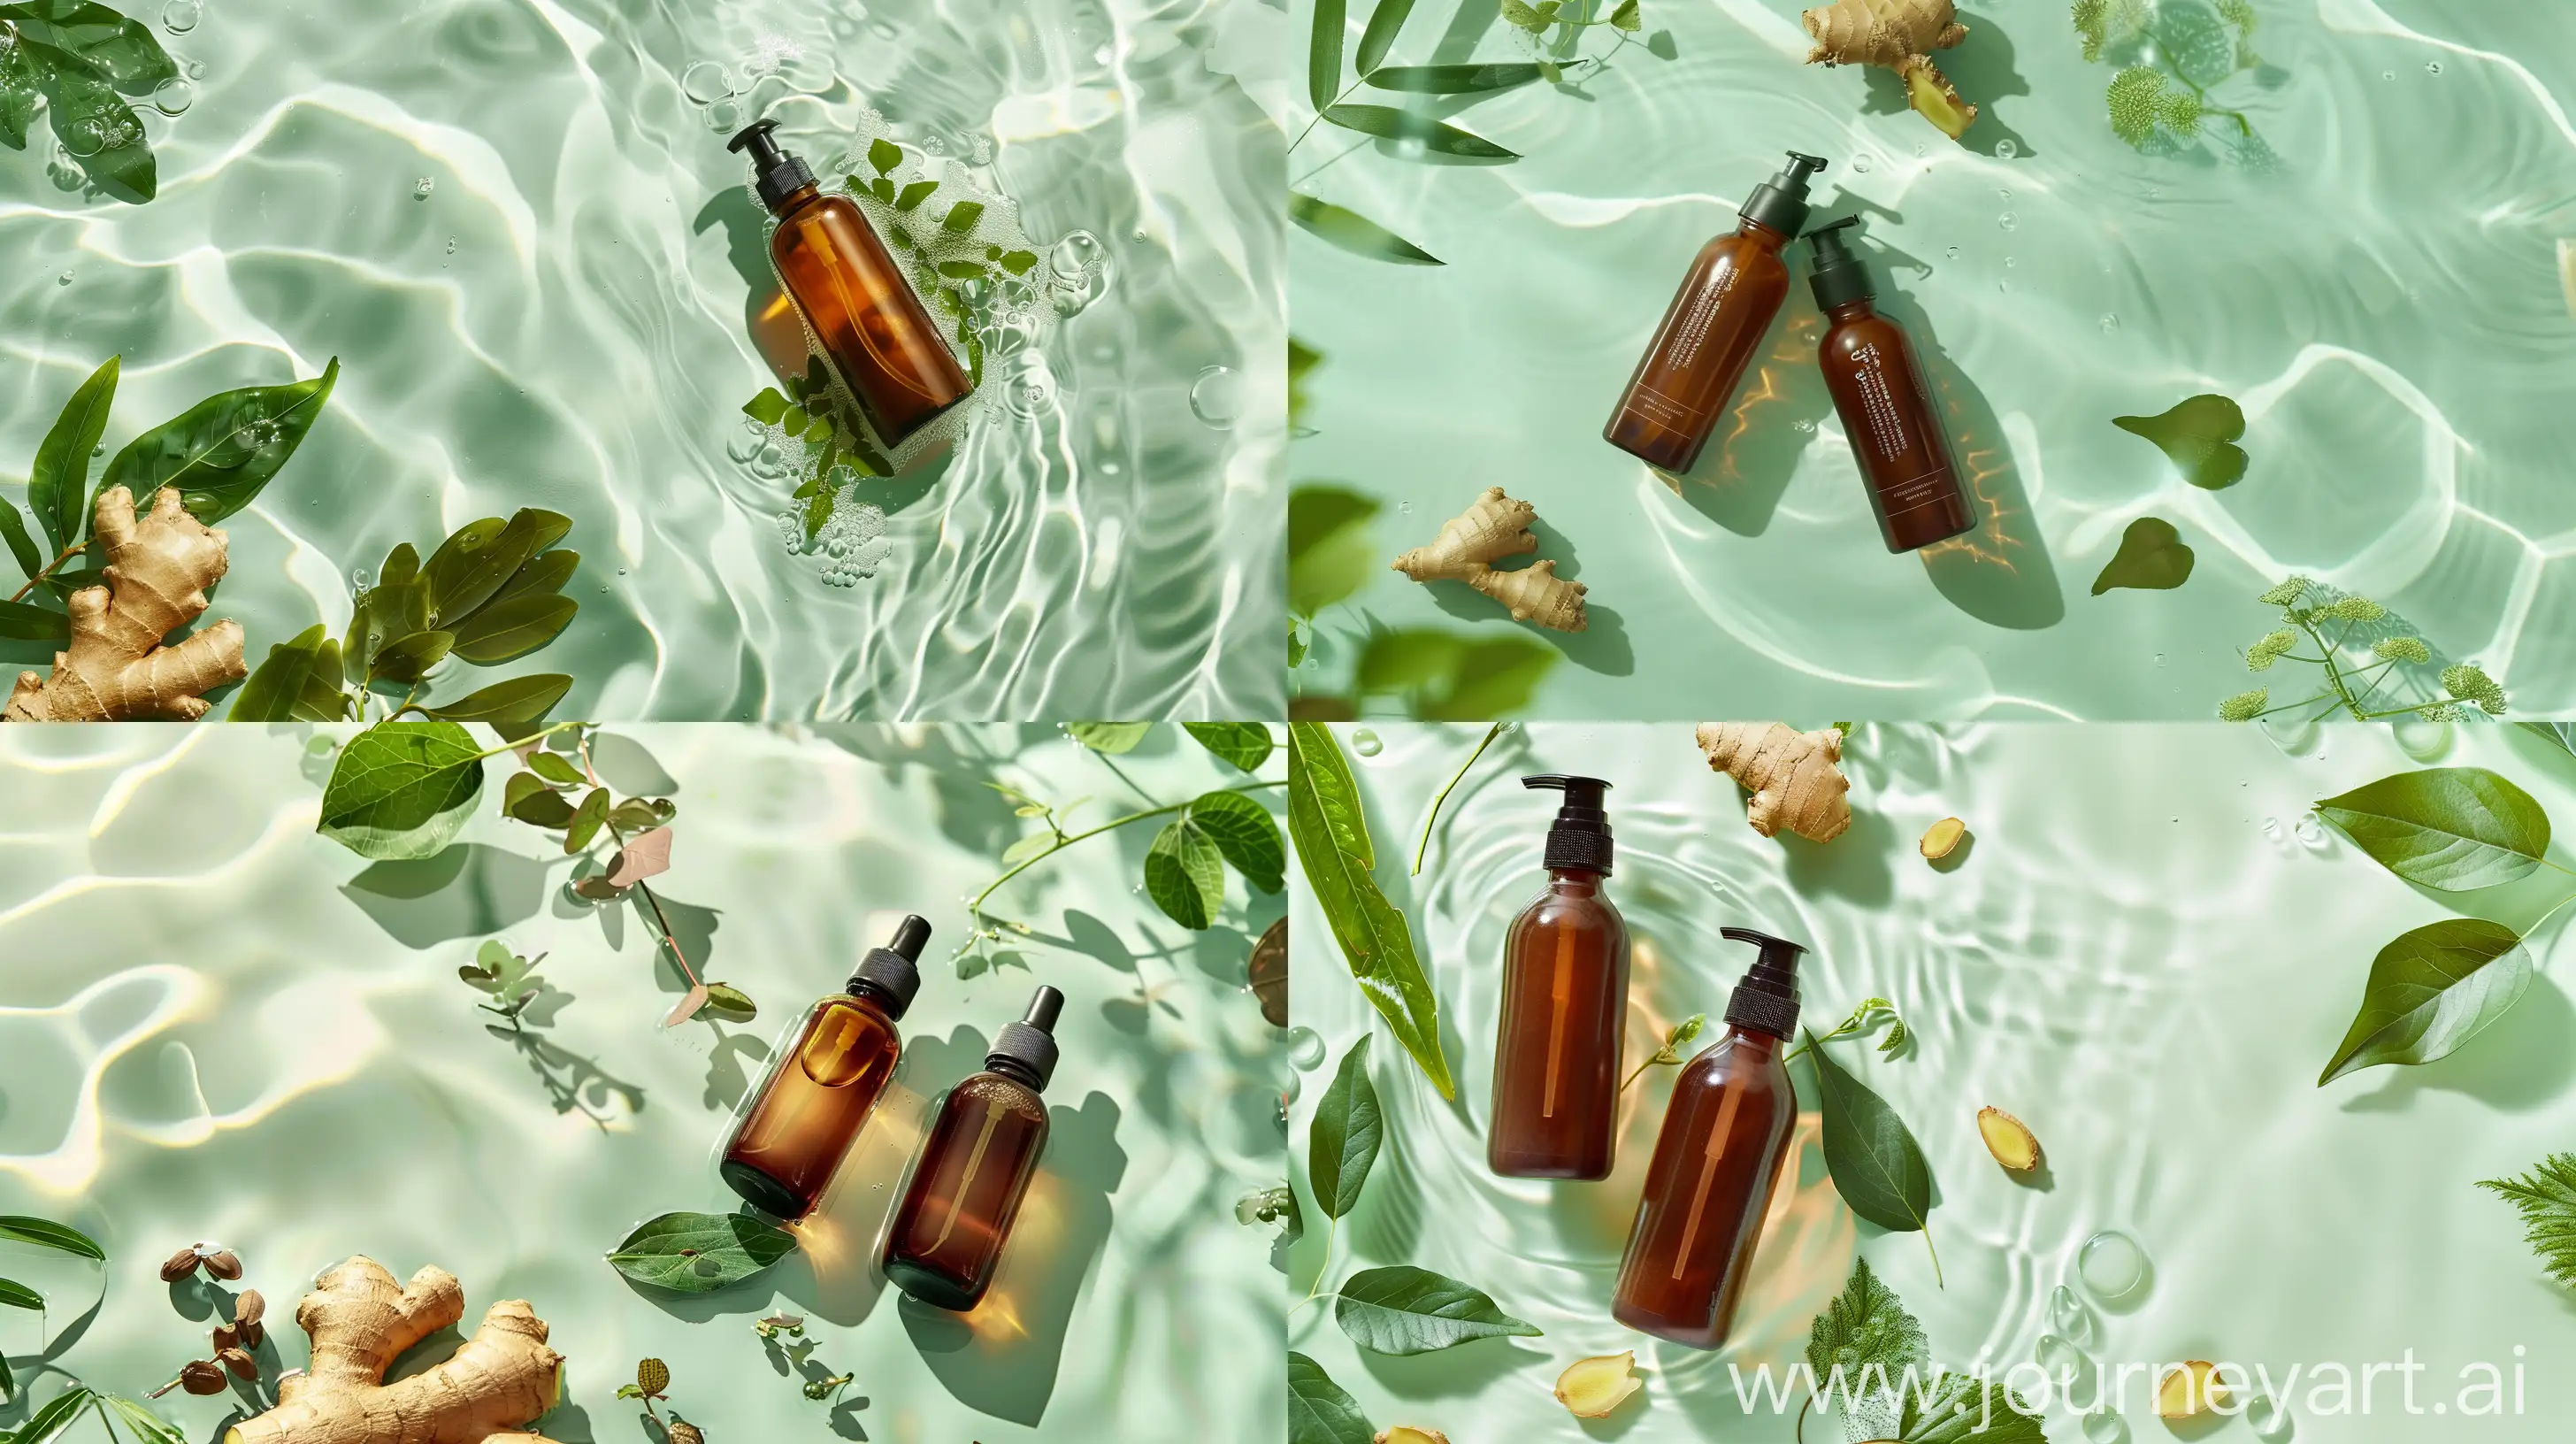 Shampoo-Bottles-Amidst-Serene-Green-Waterscape